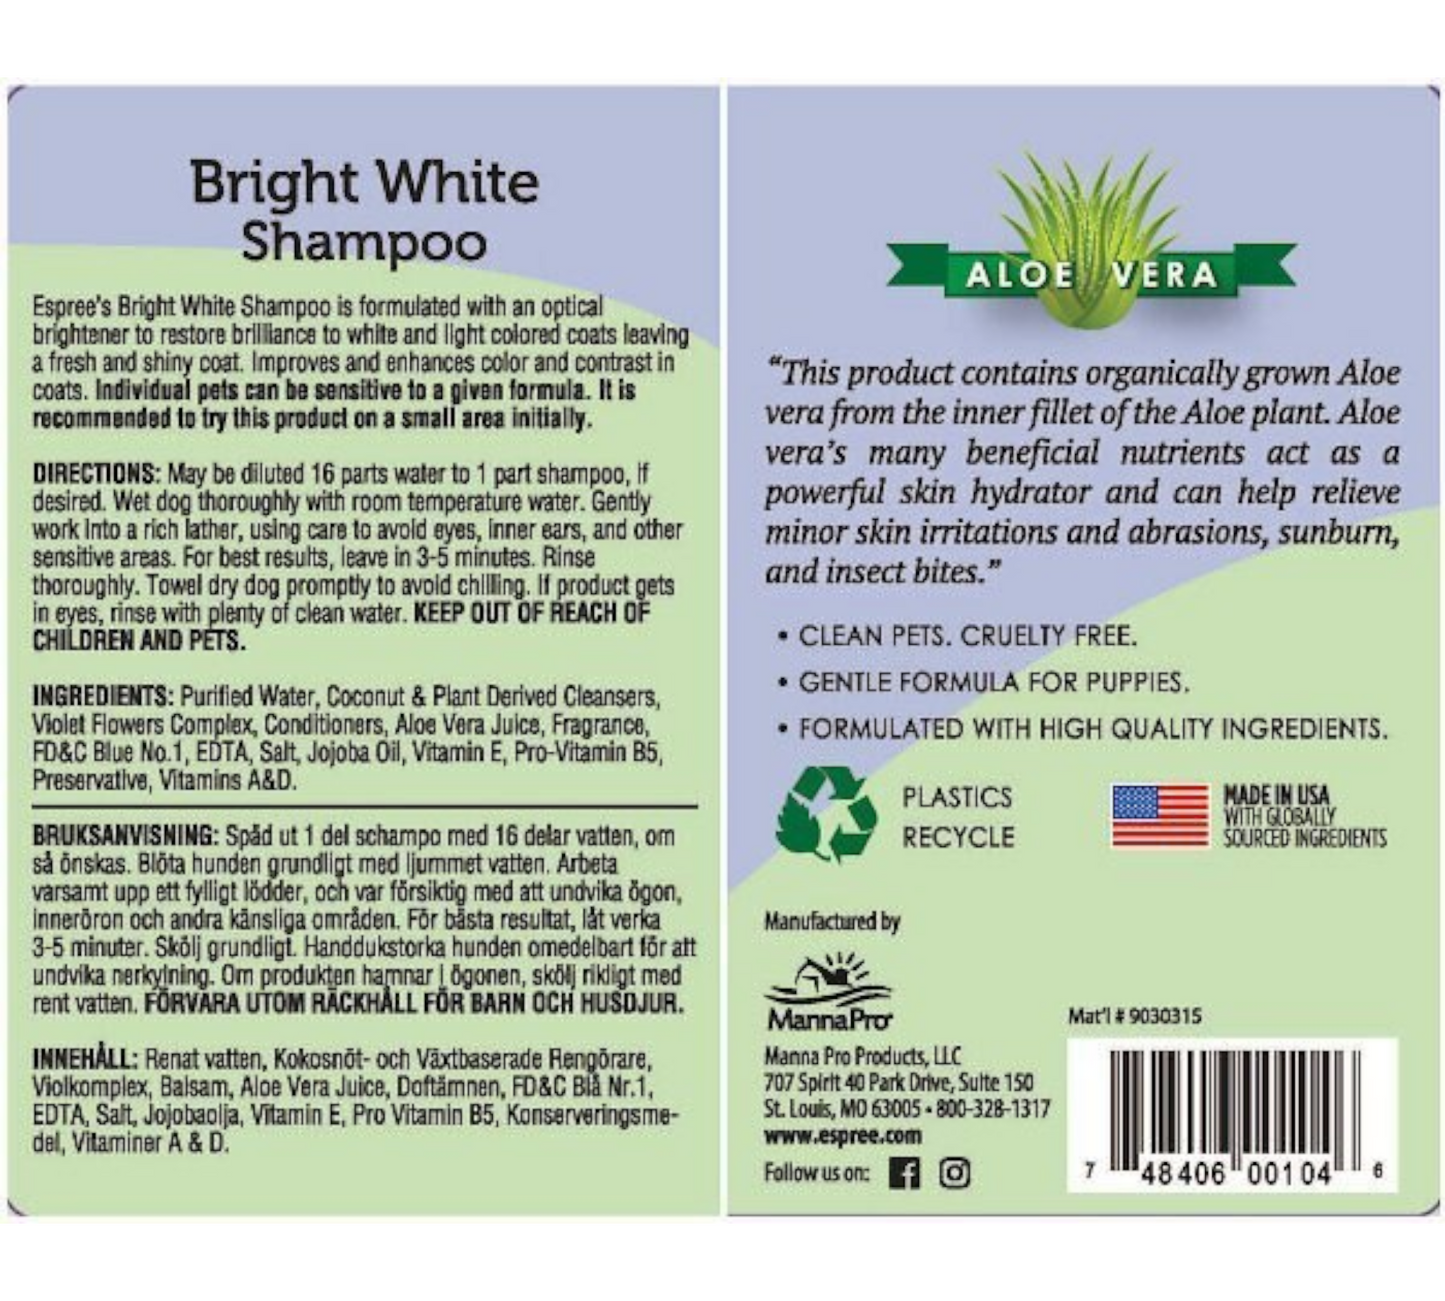 Espree Bright White Shampoo for Dogs,